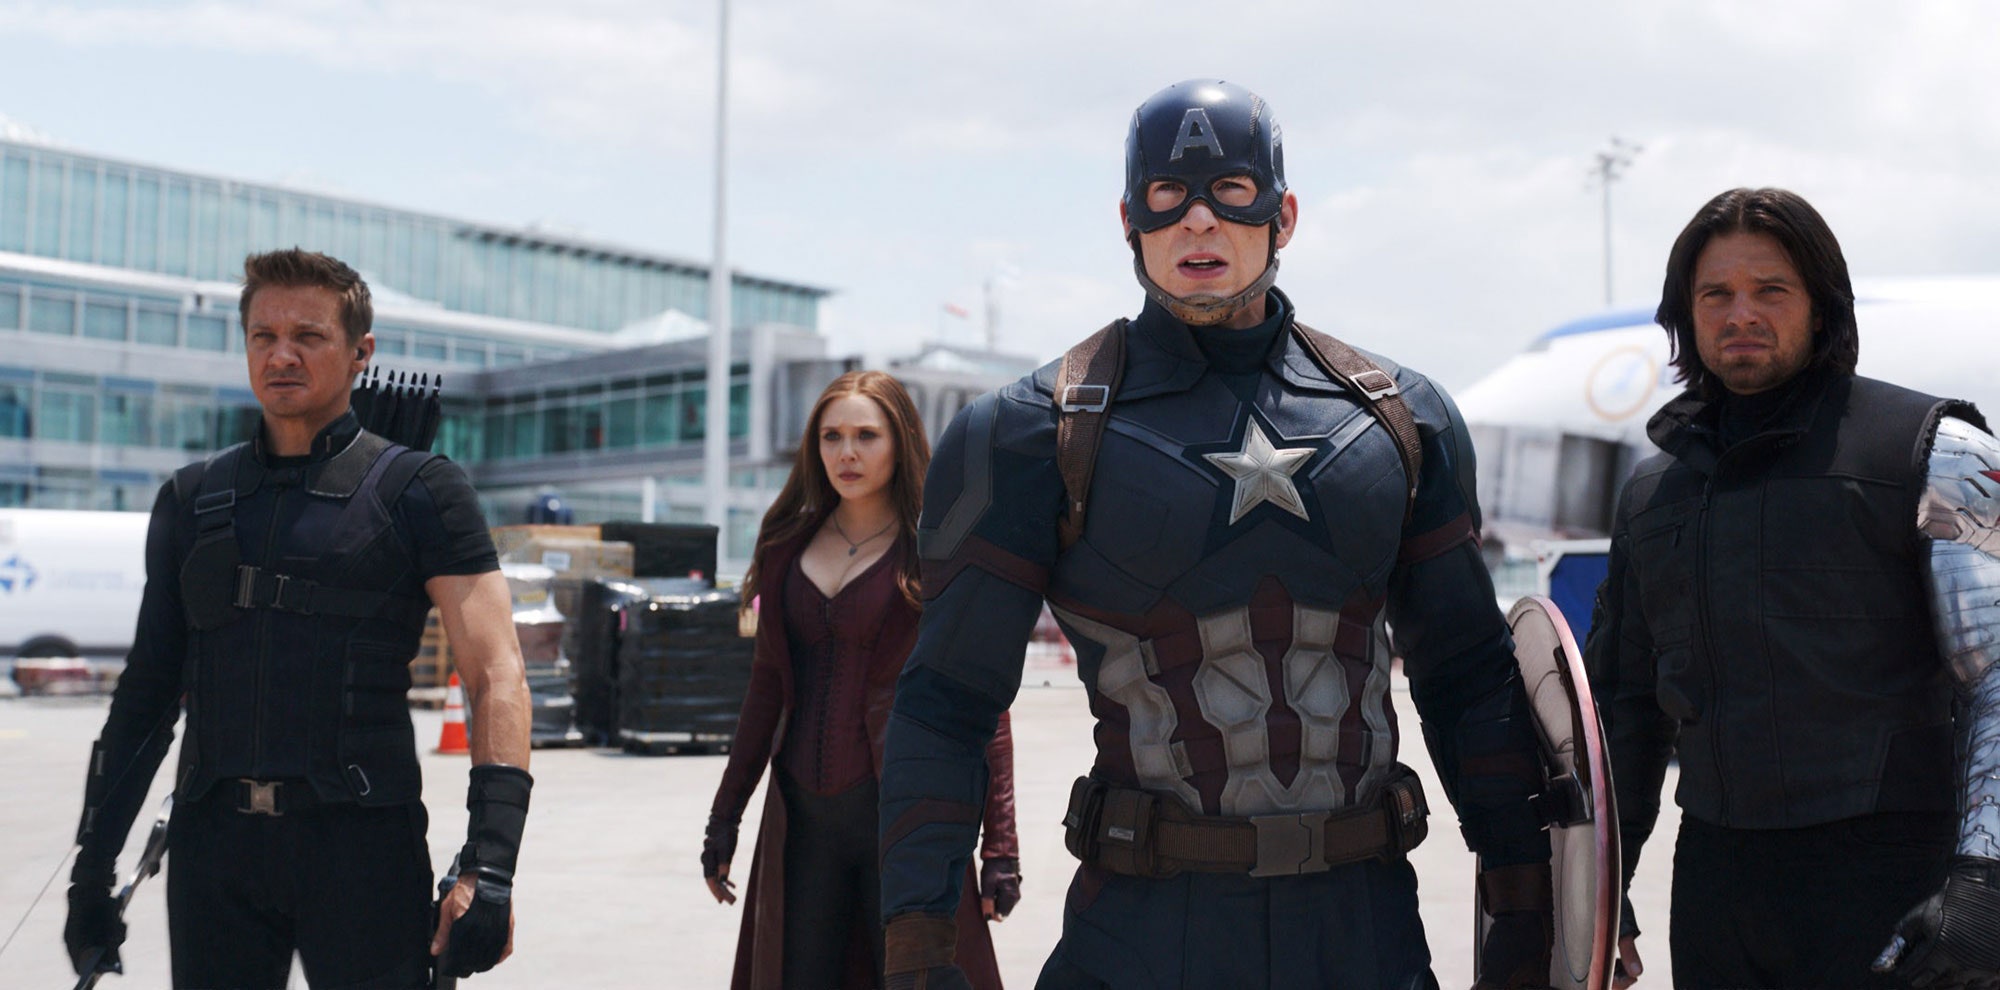 A still from Captain America: Civil War showcasing team Captain America